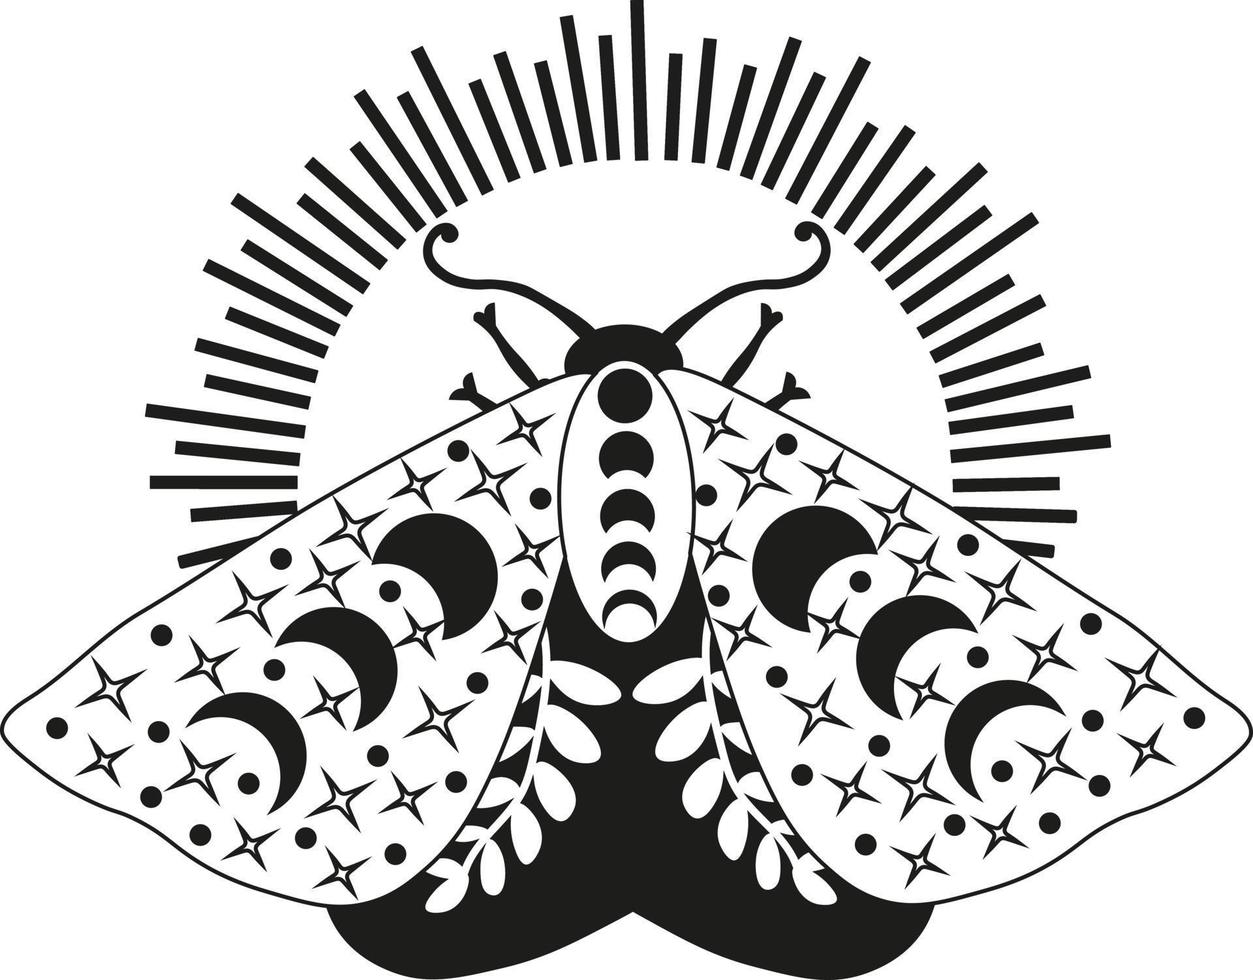 Composition Tarot Mystery Moon Moth vector illustration